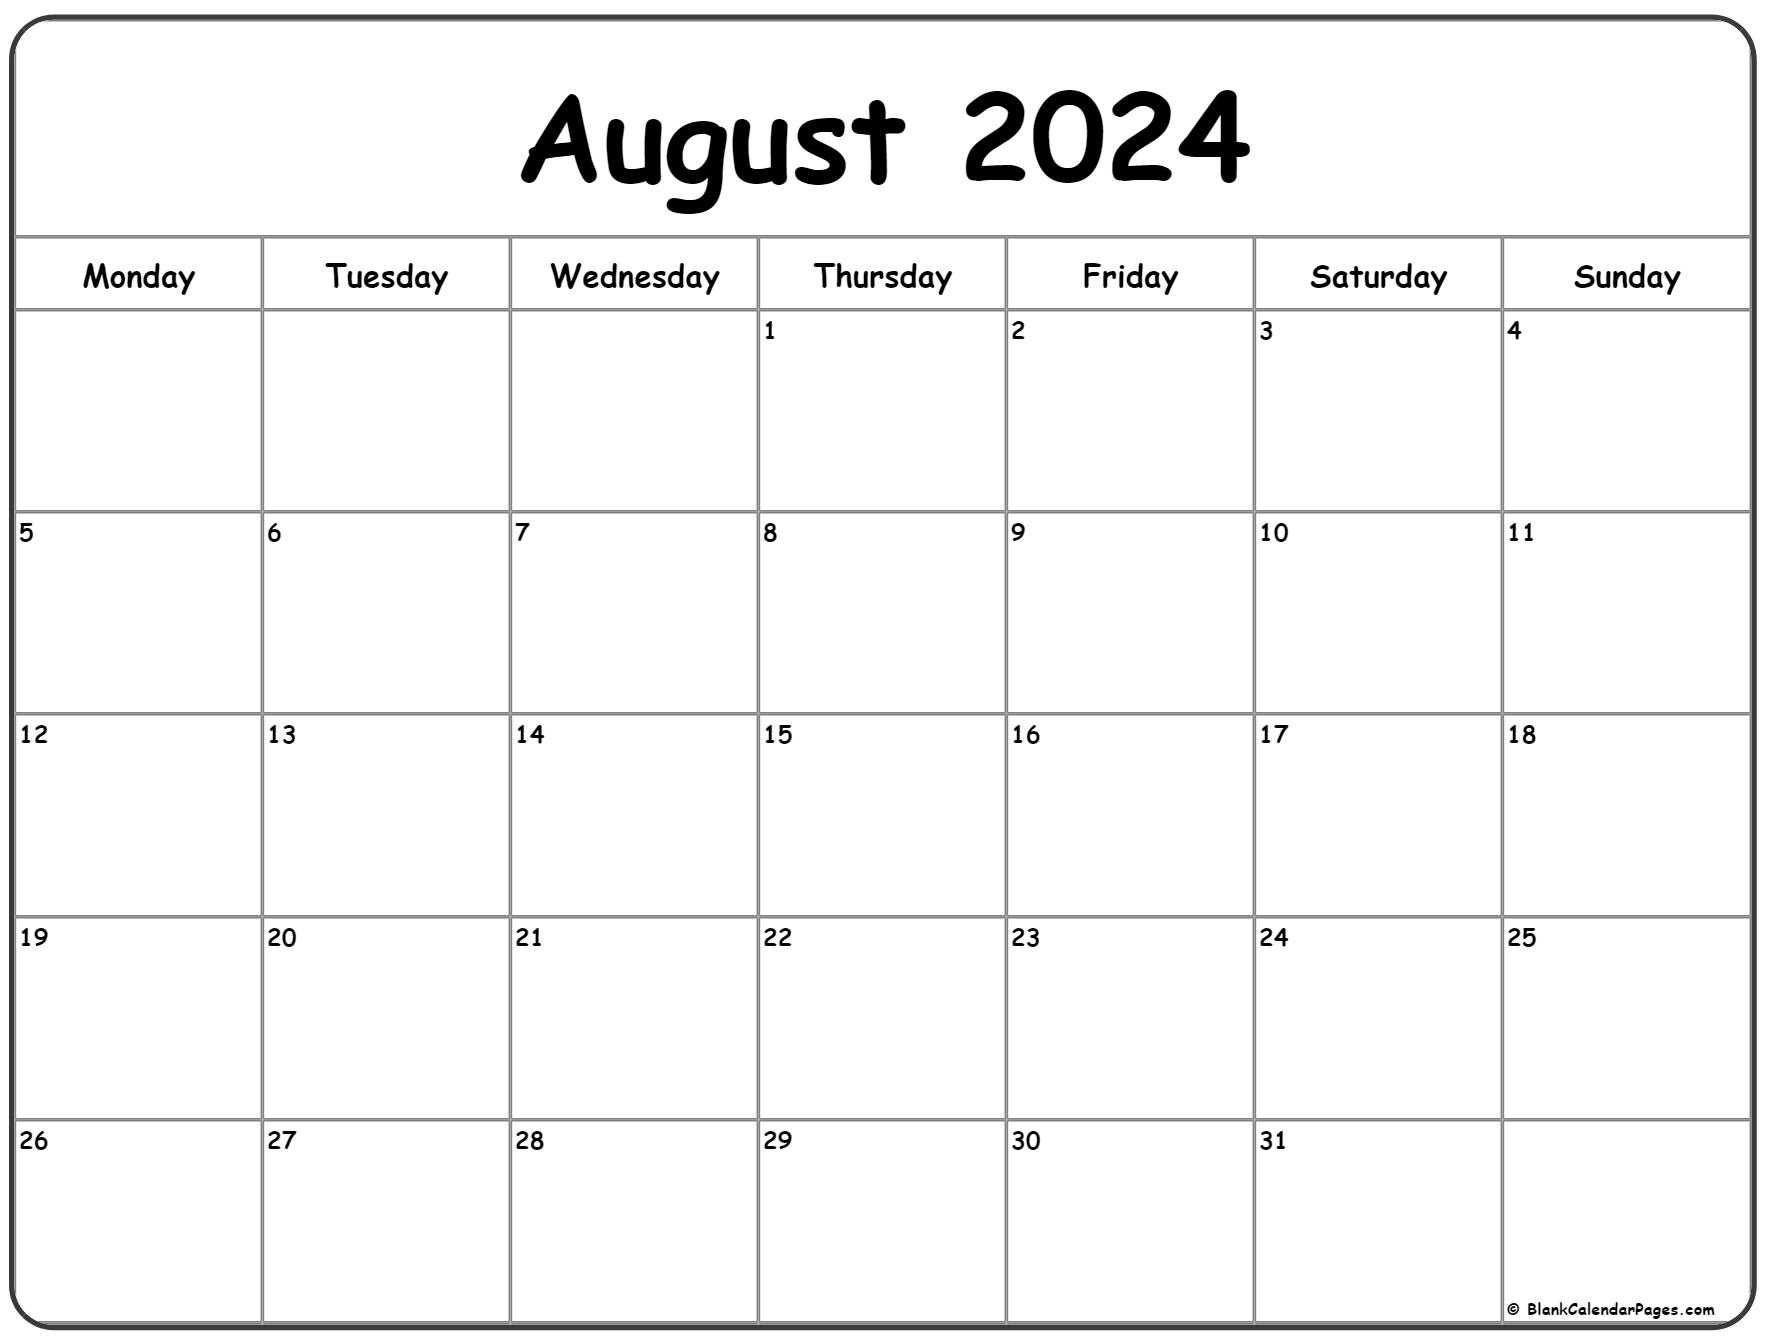 August 2024 Monday Calendar | Monday To Sunday for 2024 Printable Calendar August